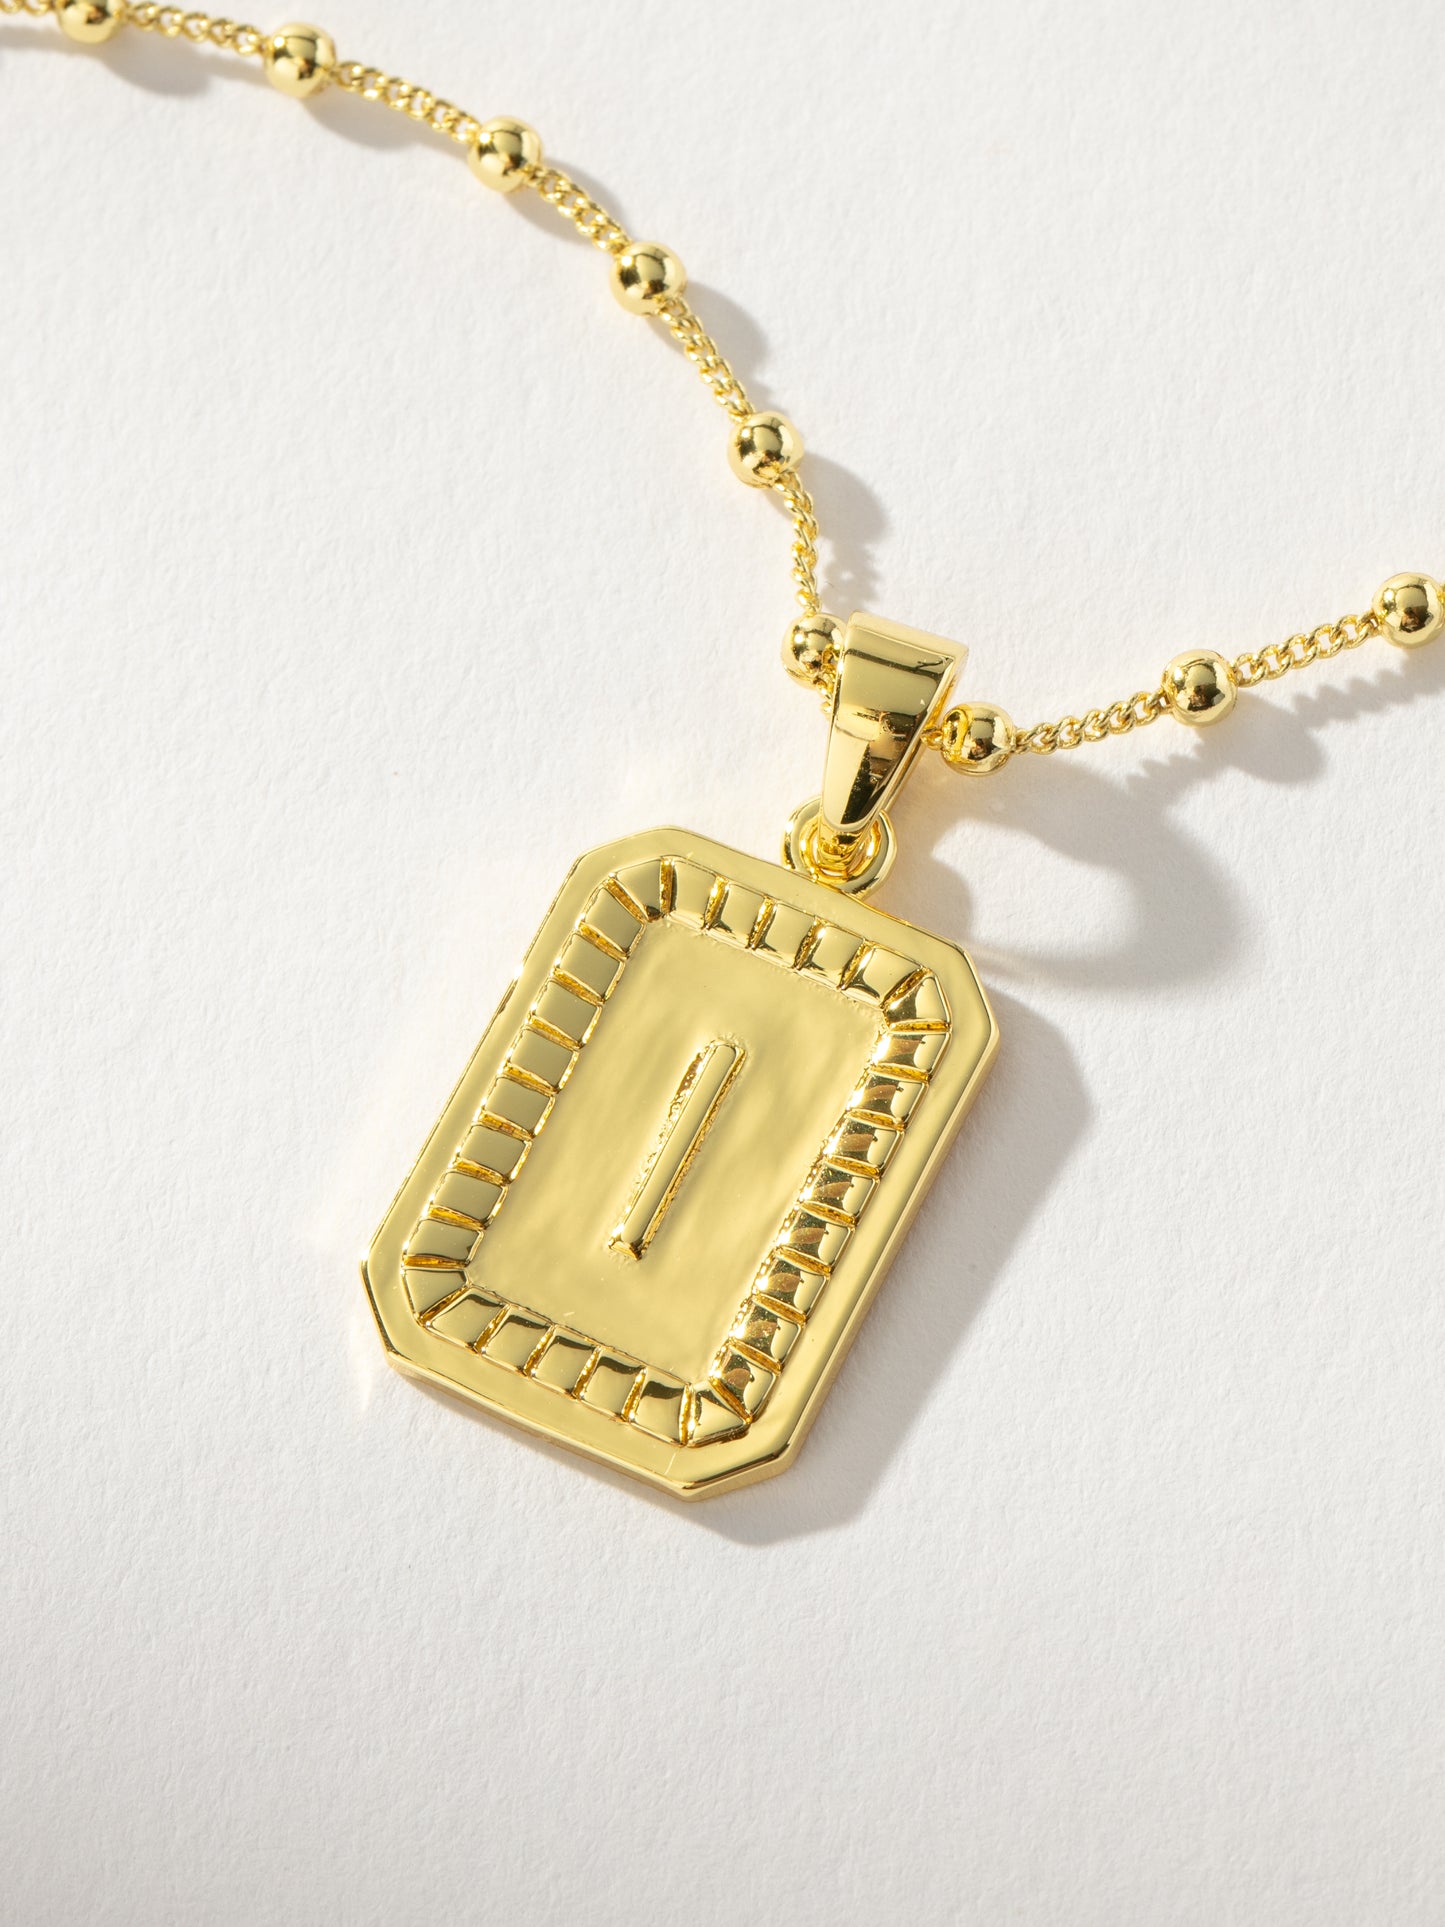 Sur Necklace | Gold I | Product Image | Uncommon James